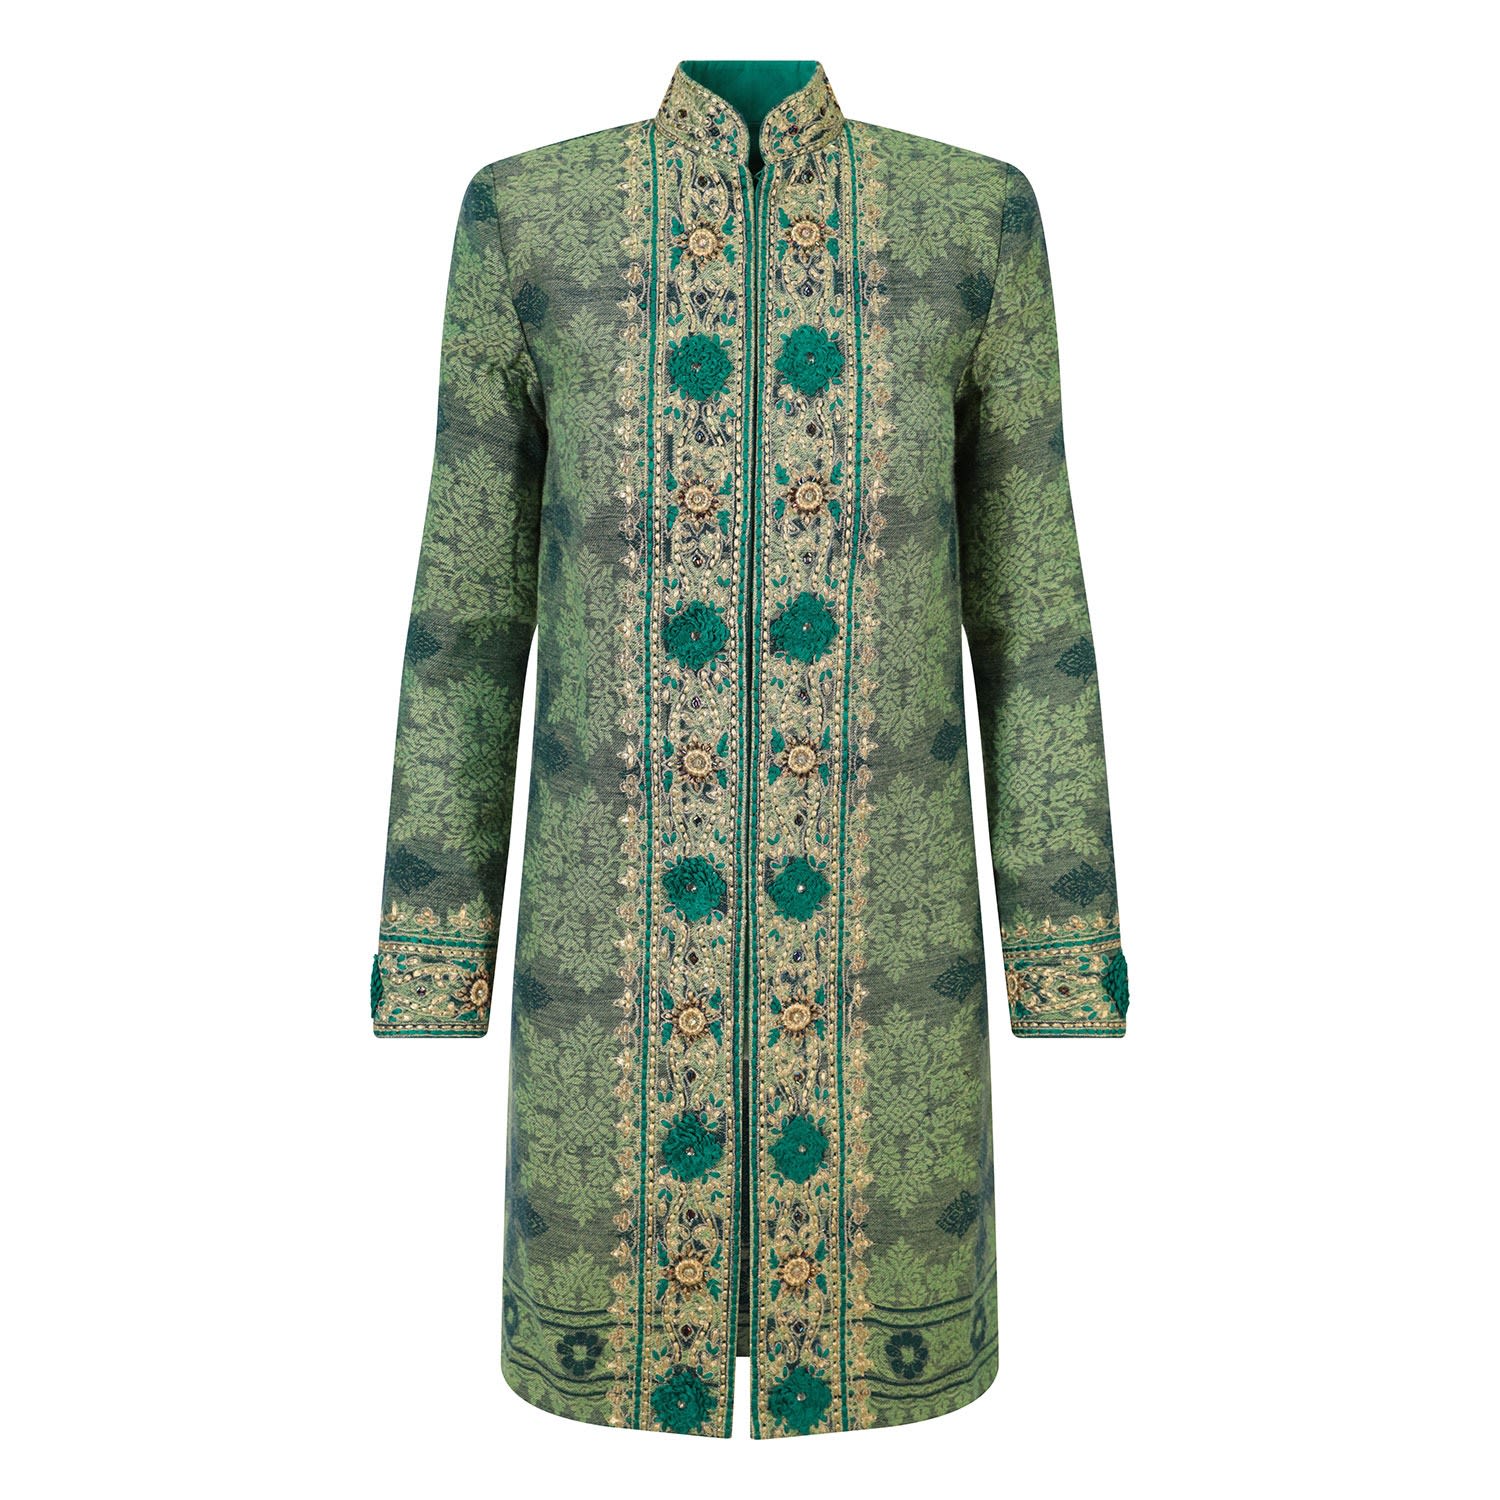 Women’s Green Jade Shawl Rosette Wool Shawl Jacket Large Beatrice Von Tresckow